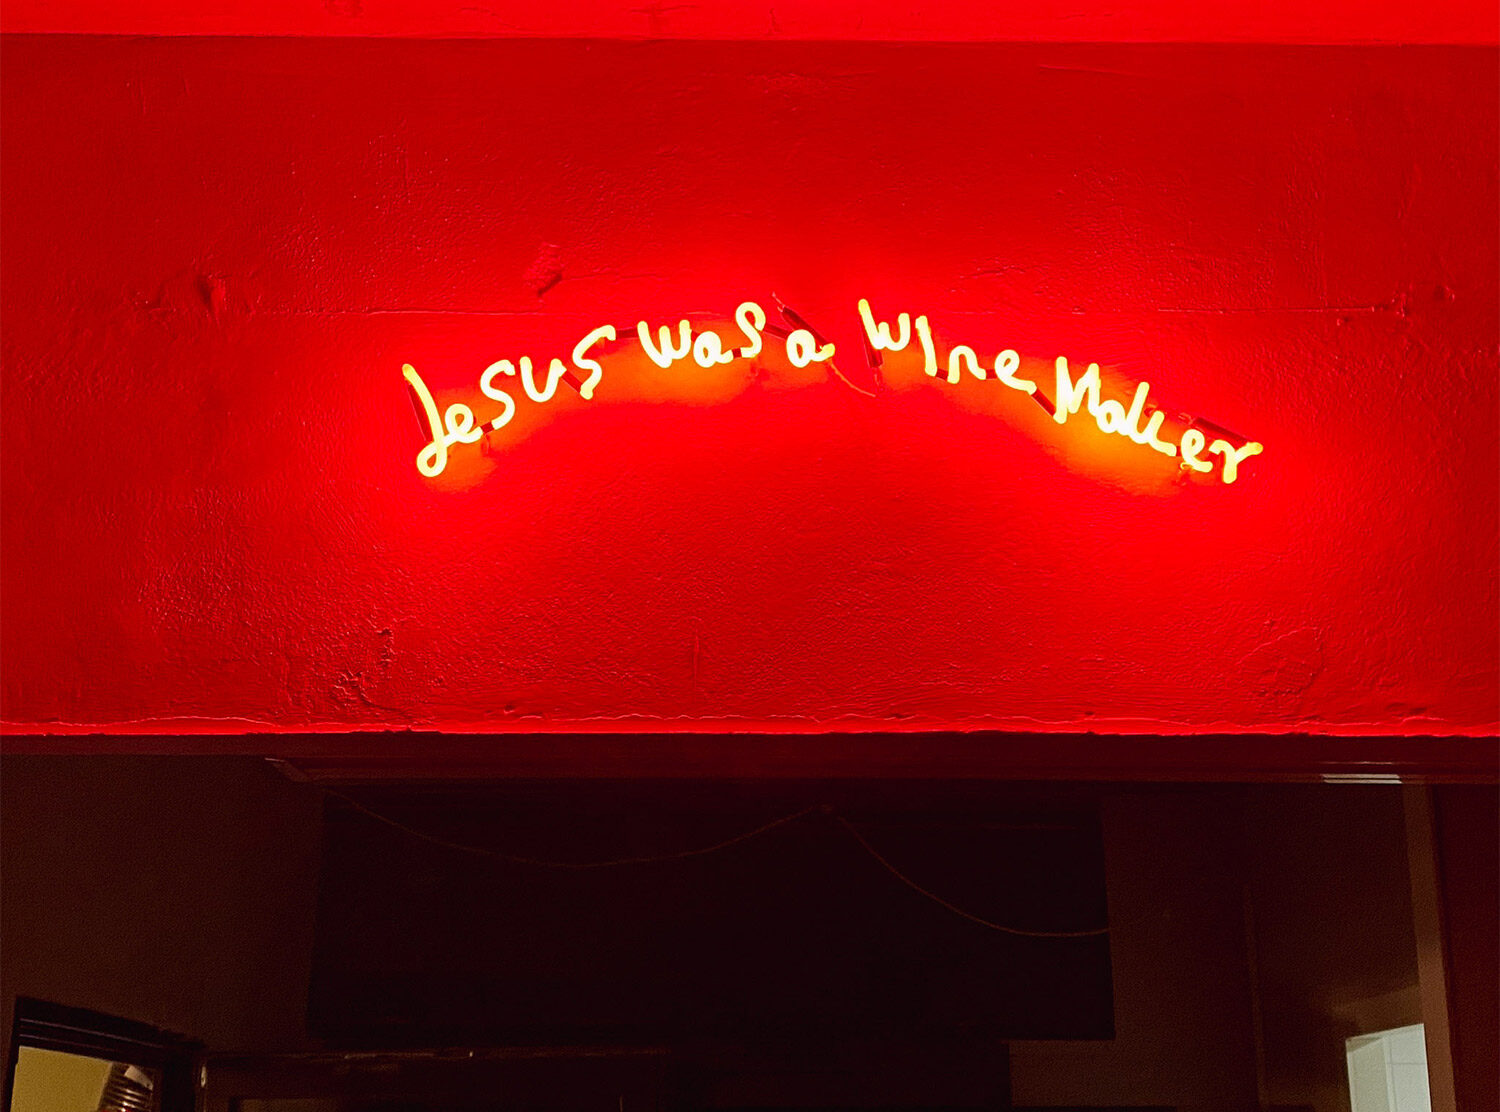 Hotel Antigua Palma Bar La Sang paying homage to the original wine magician — Jesus himself